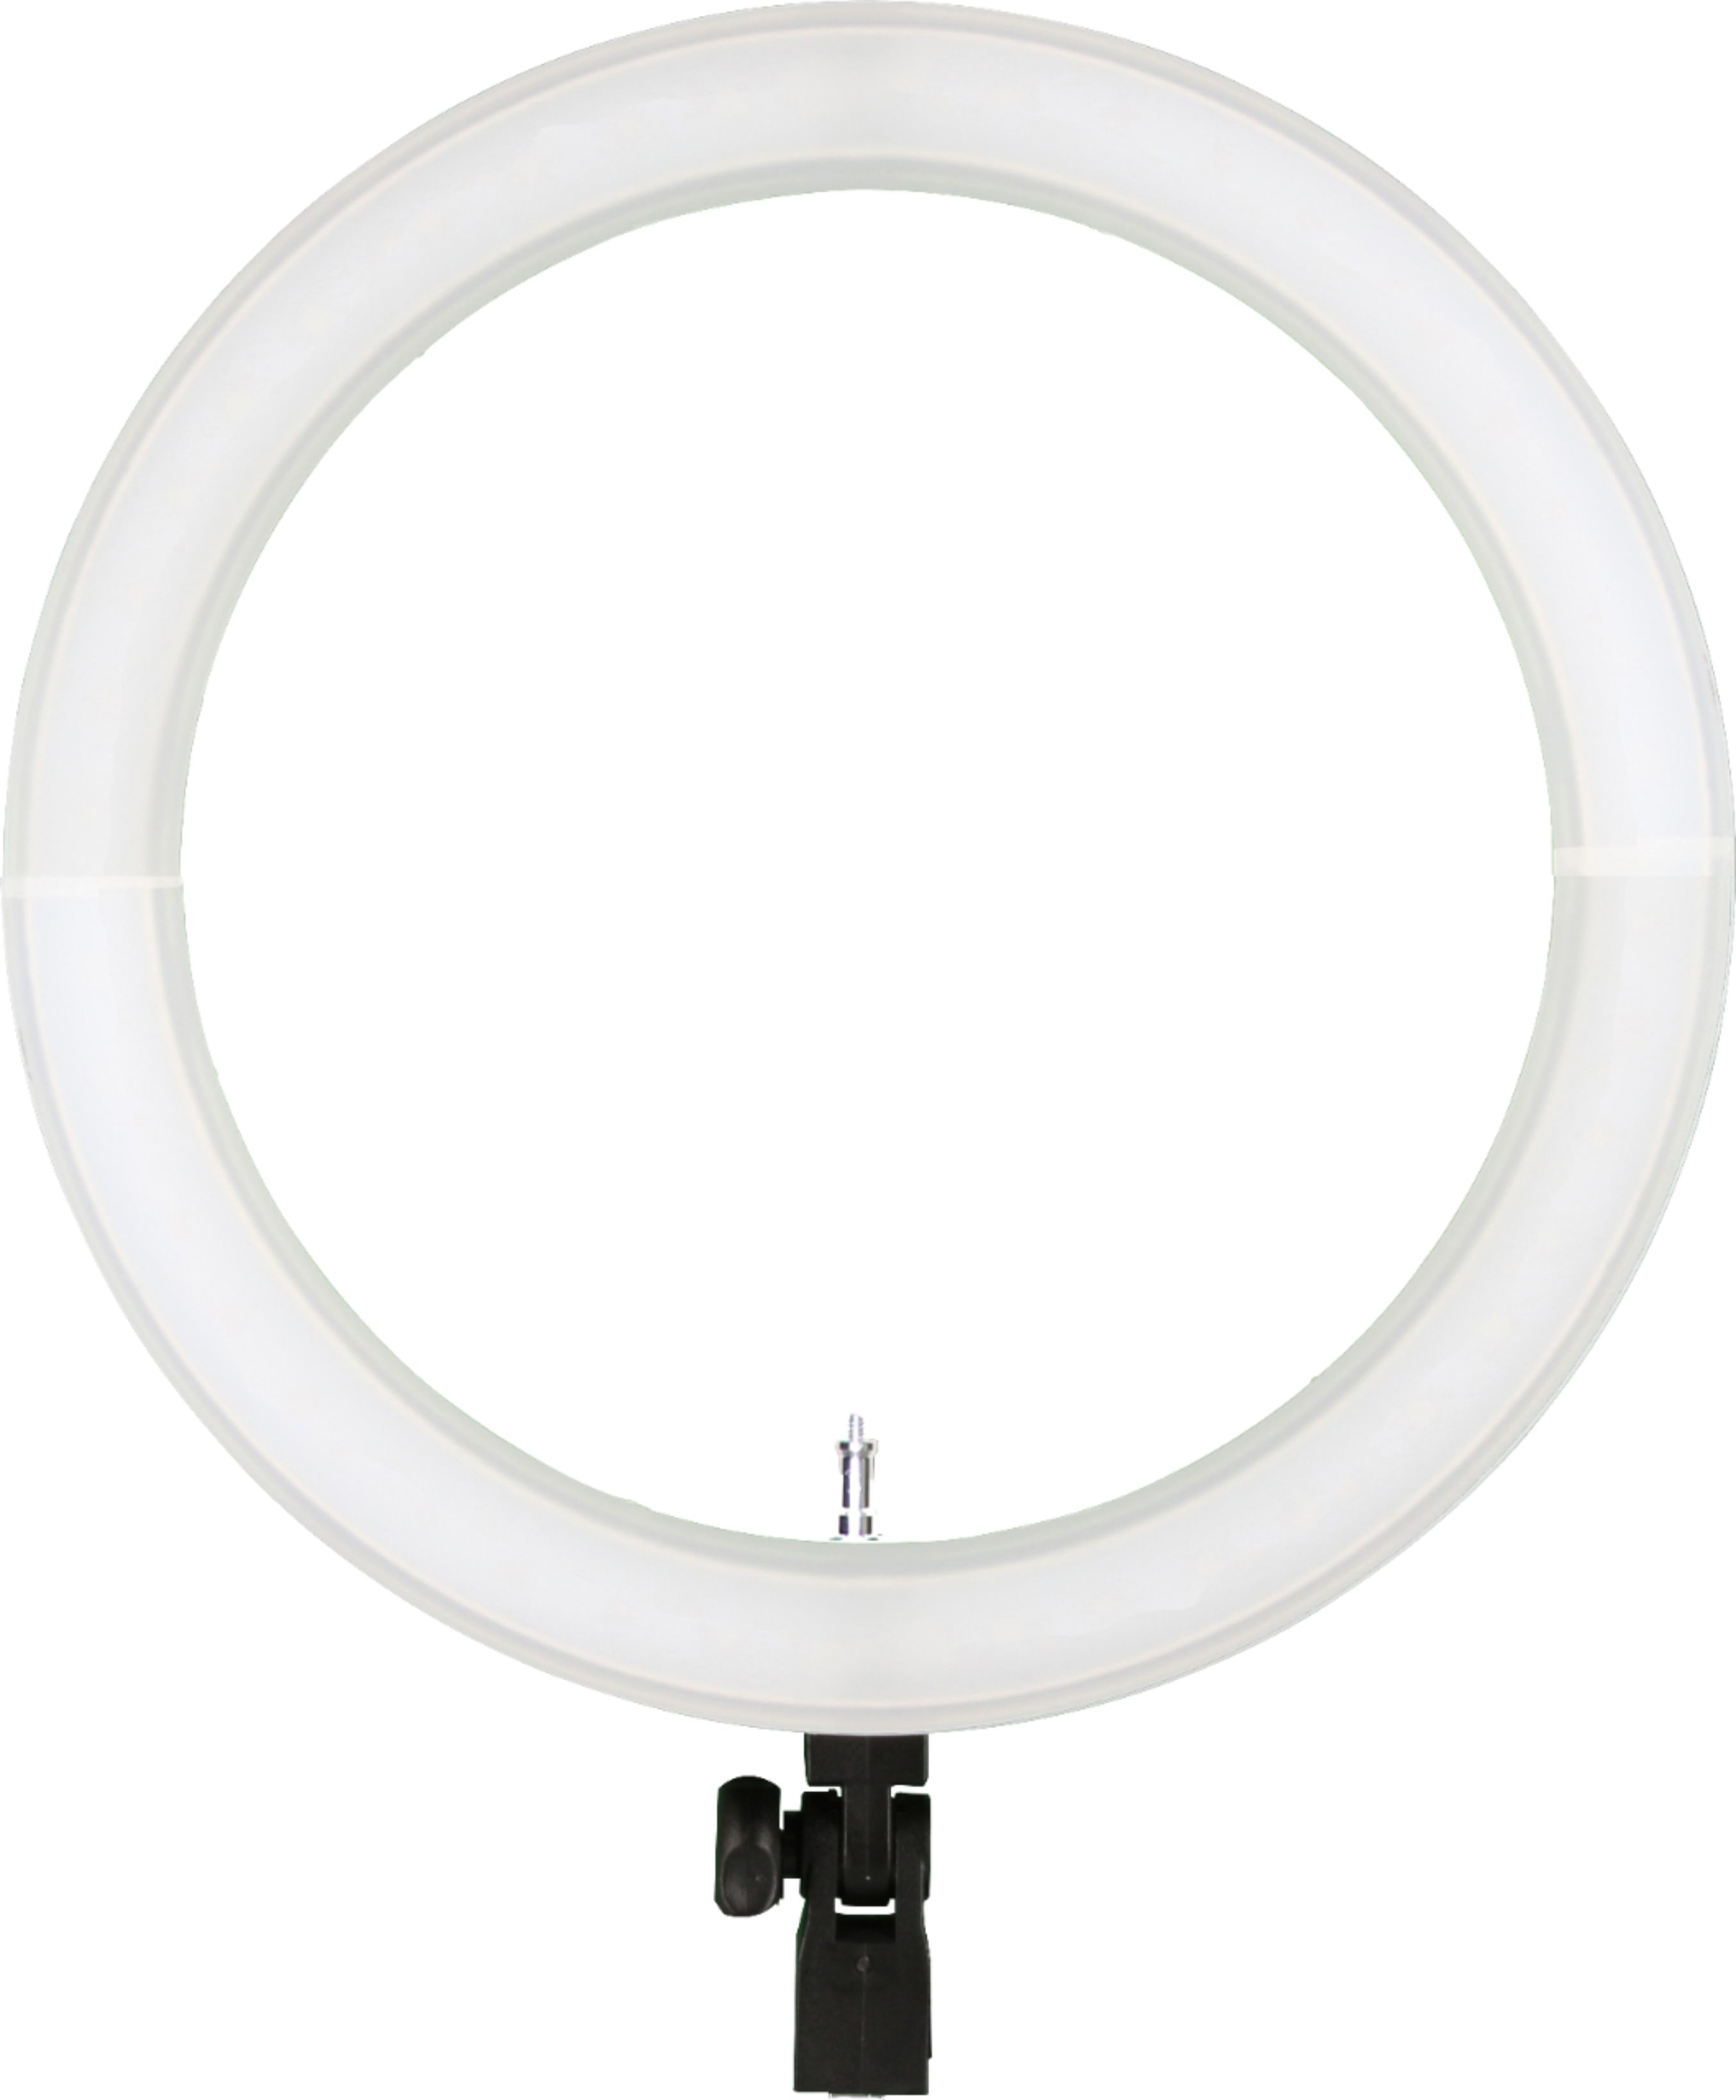  Elitehood Ring Light, 19 inch/48cm Ring Lights with